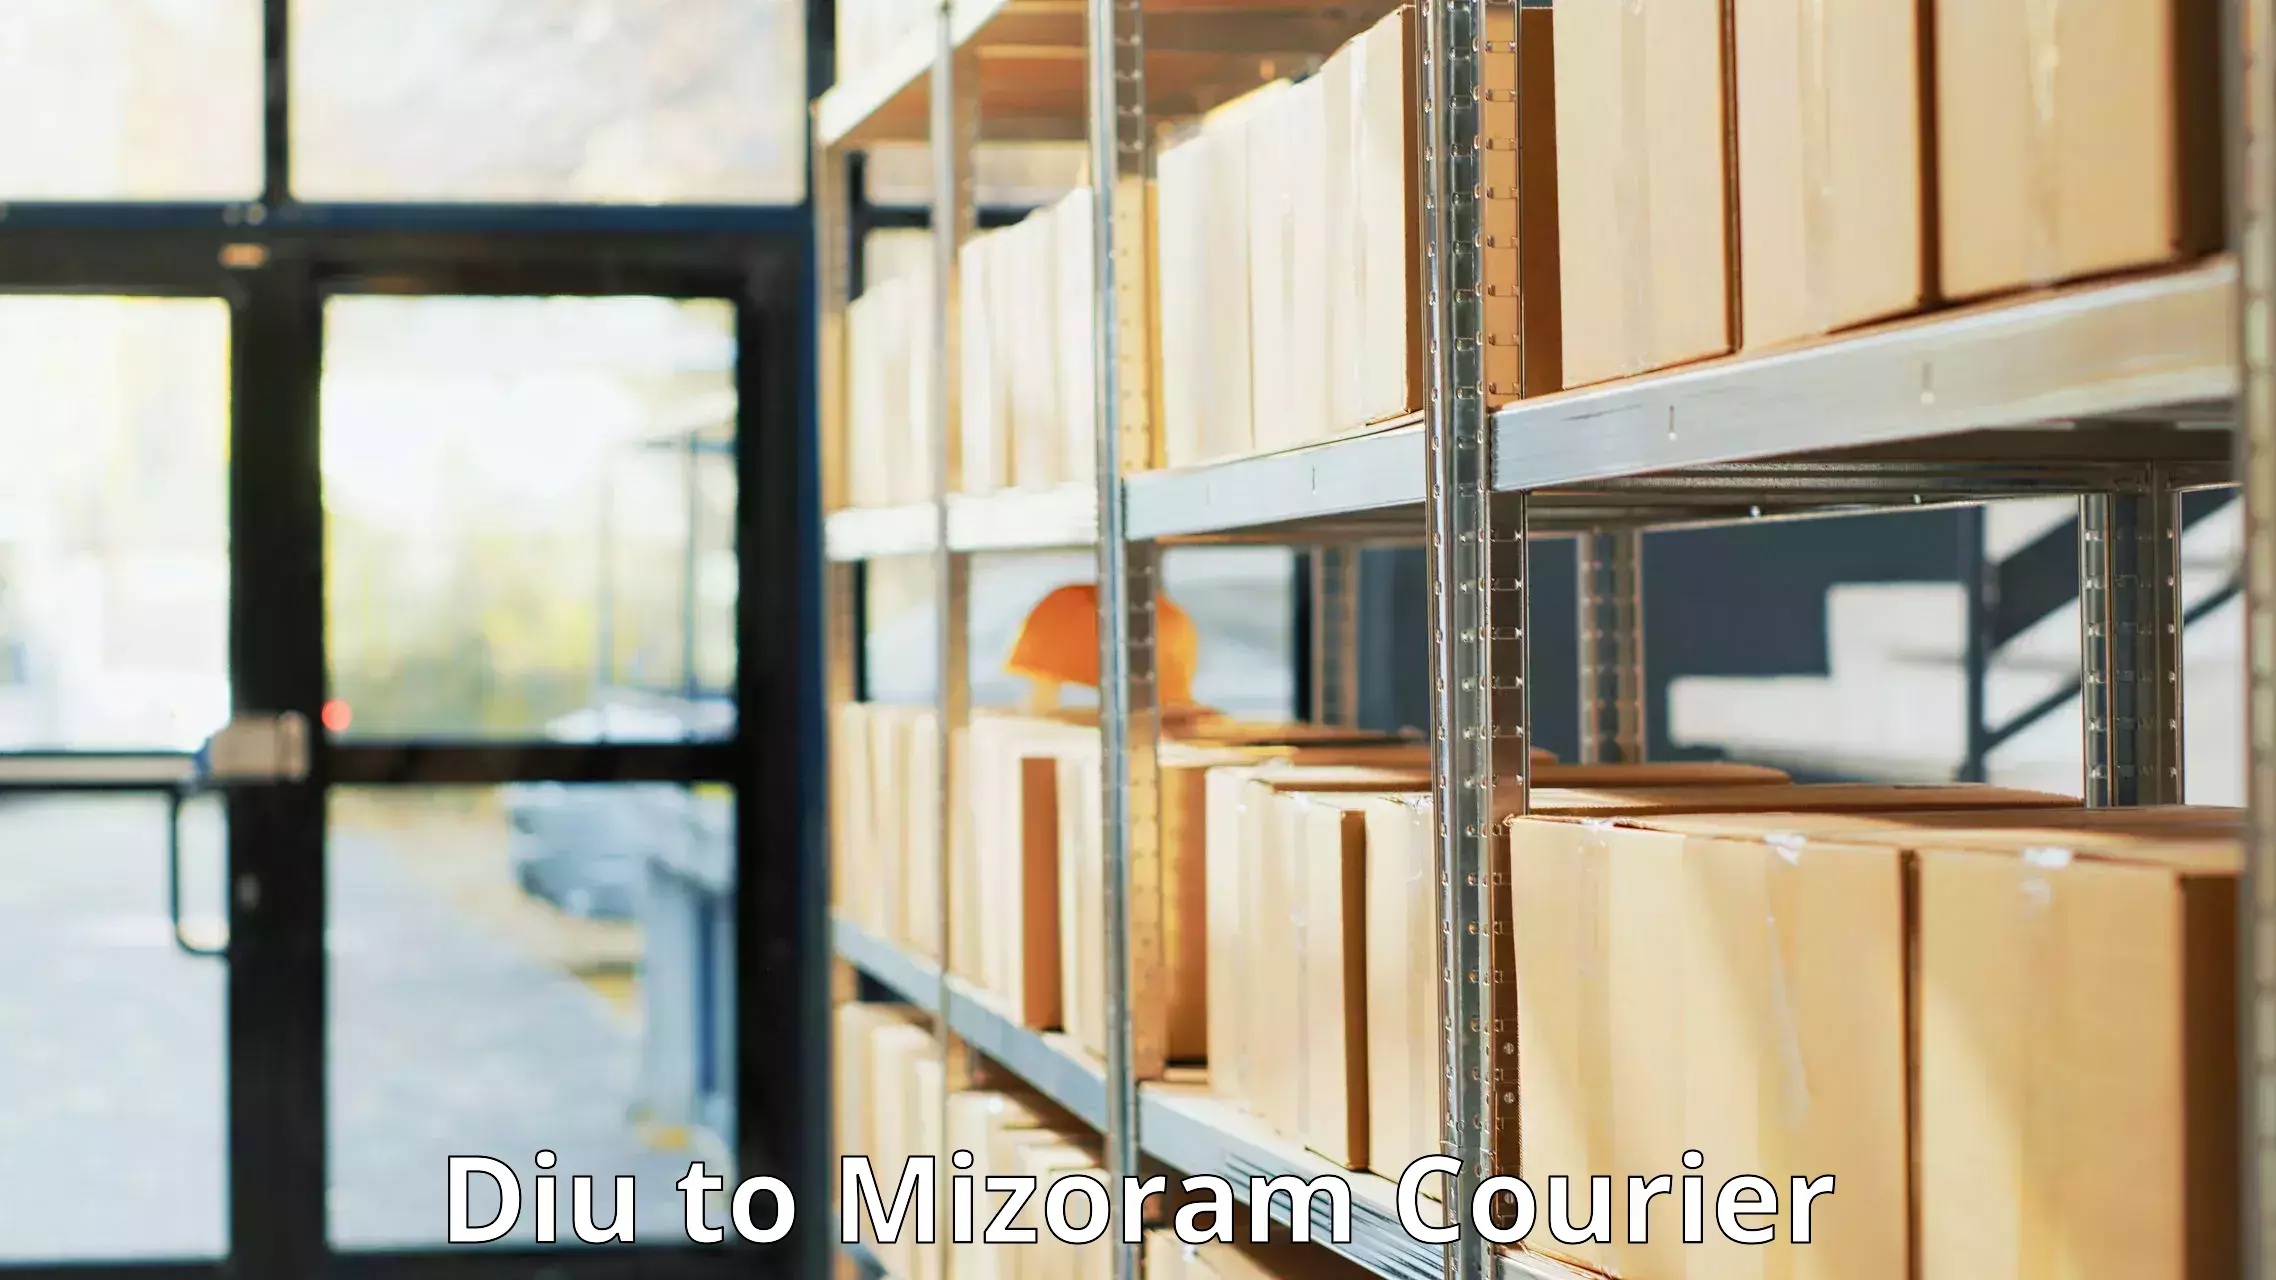 Courier service partnerships Diu to Aizawl